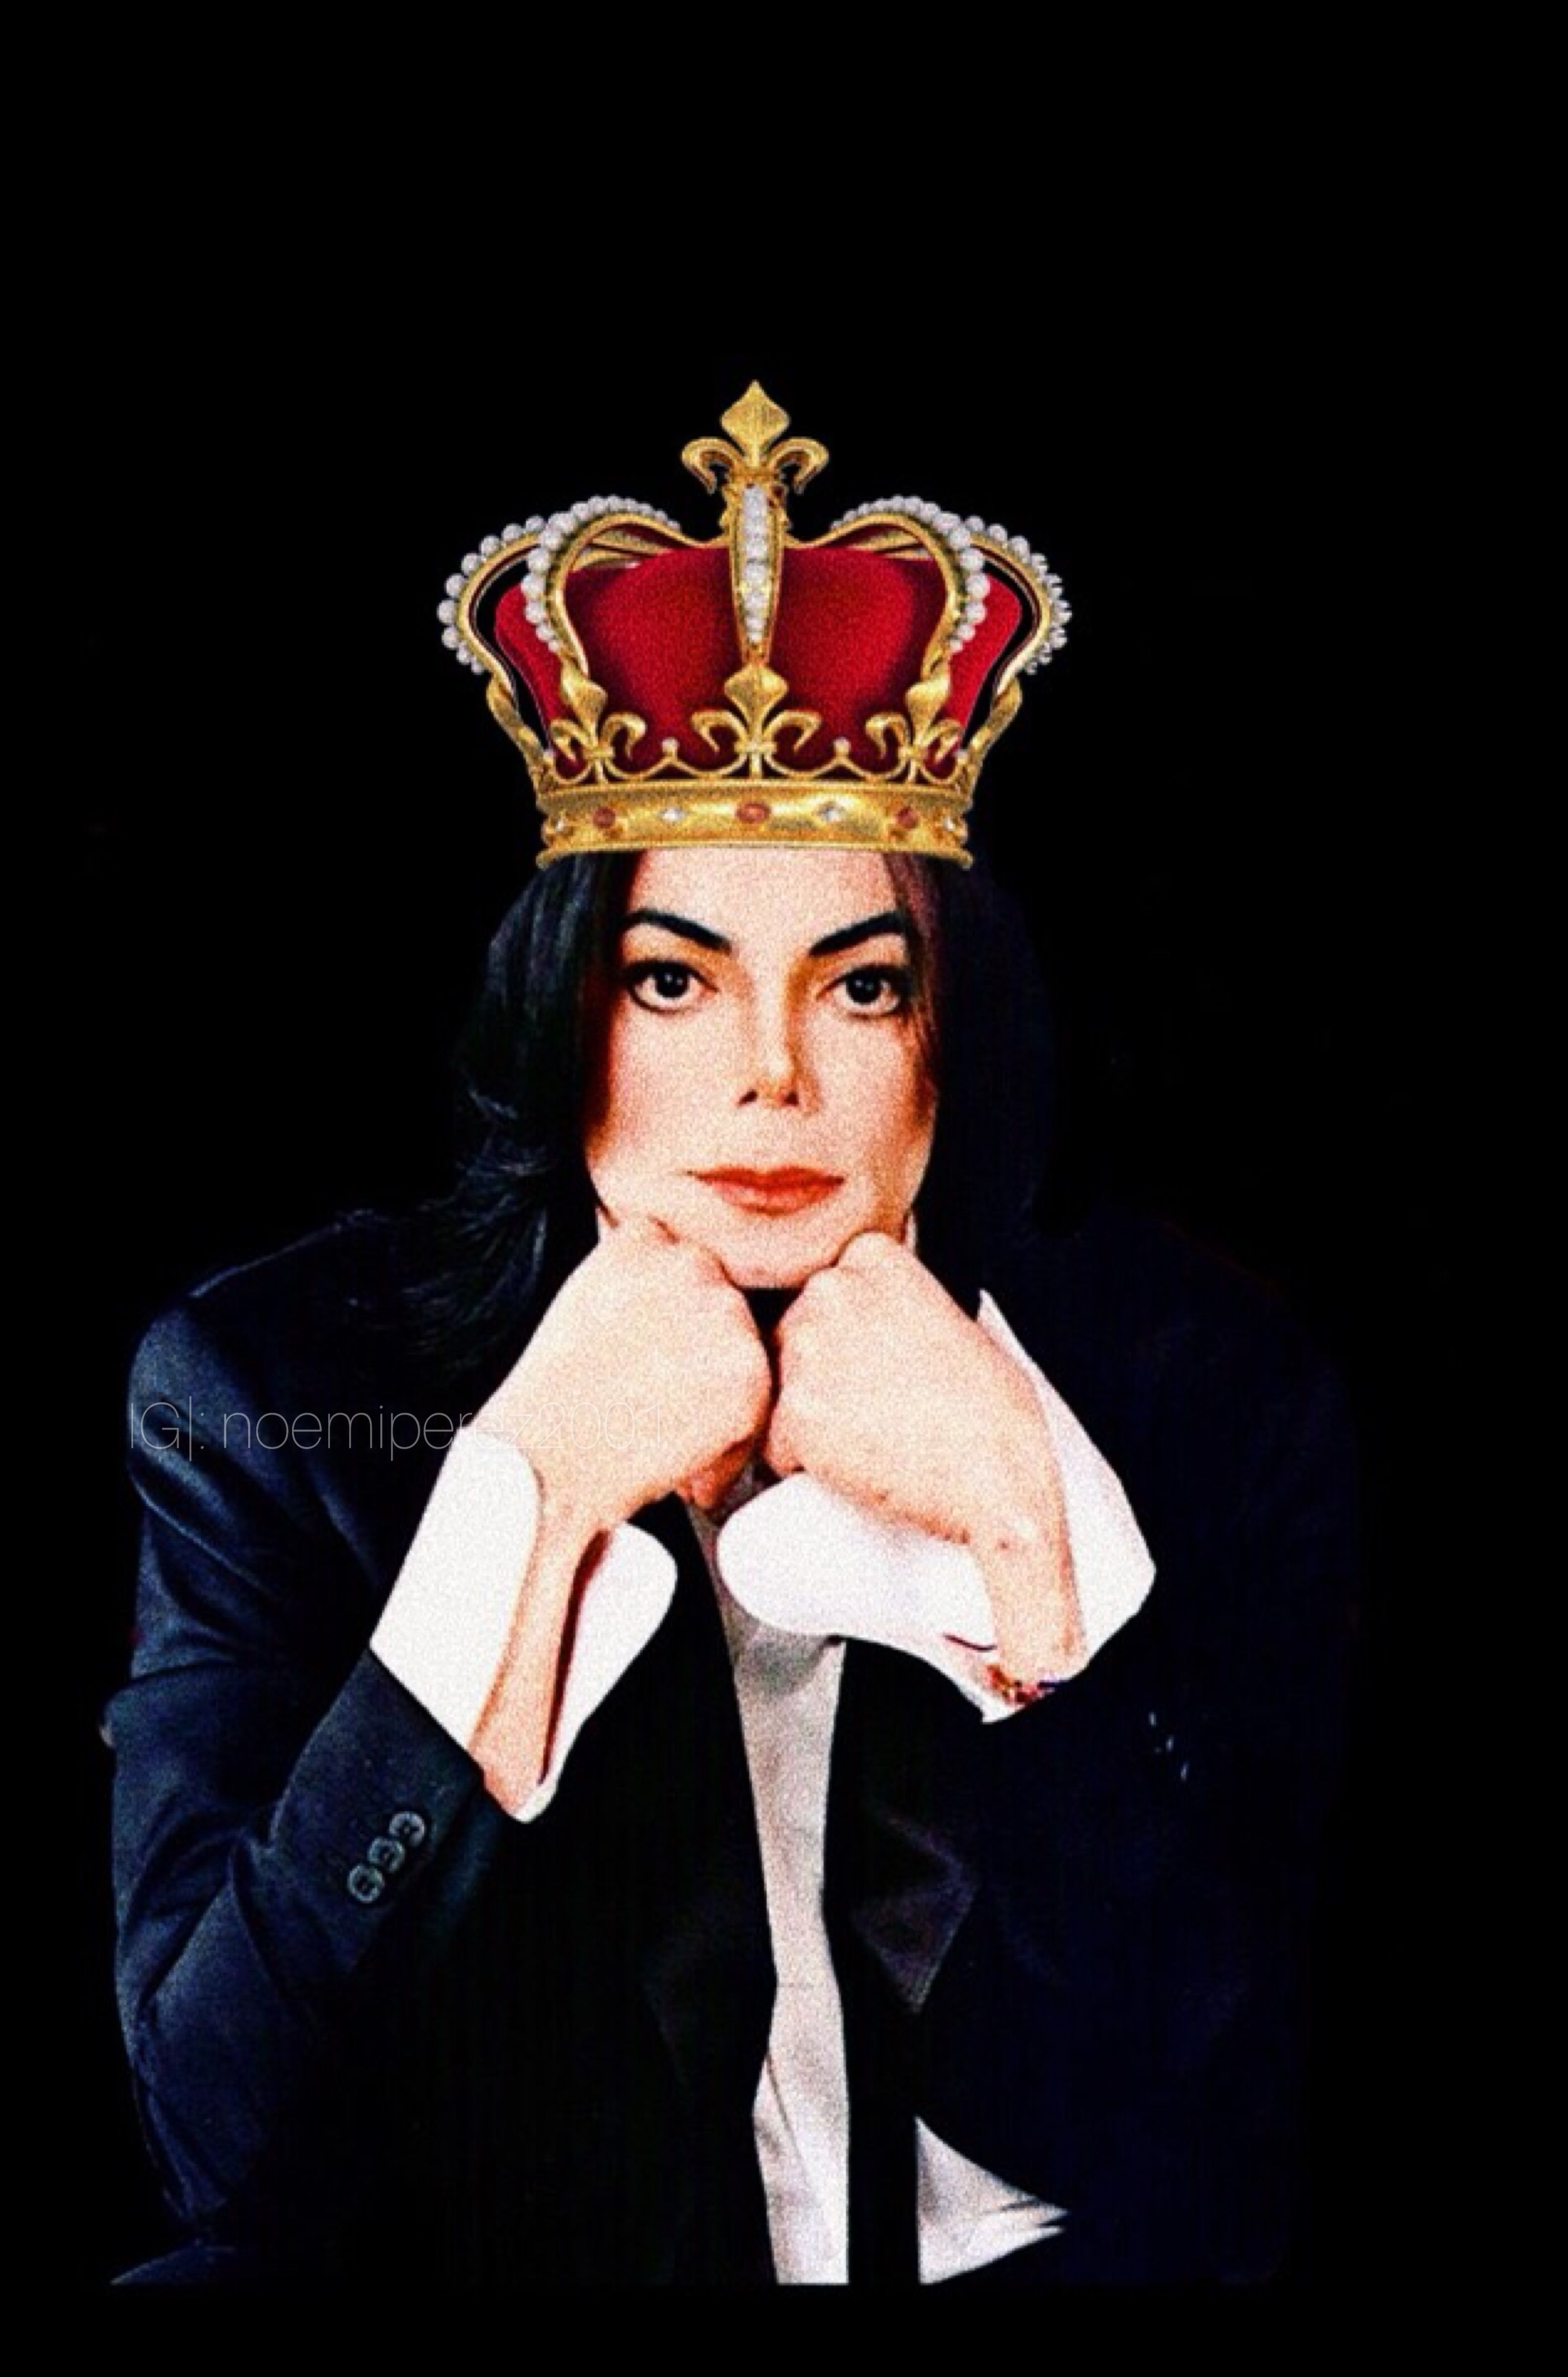 Michael Jackson King of Pop #michaeljackson #kingofpop #wallpaper #michaeljacksonfans #moonwalkers. Michael jackson, Aurora sleeping beauty, Jackson